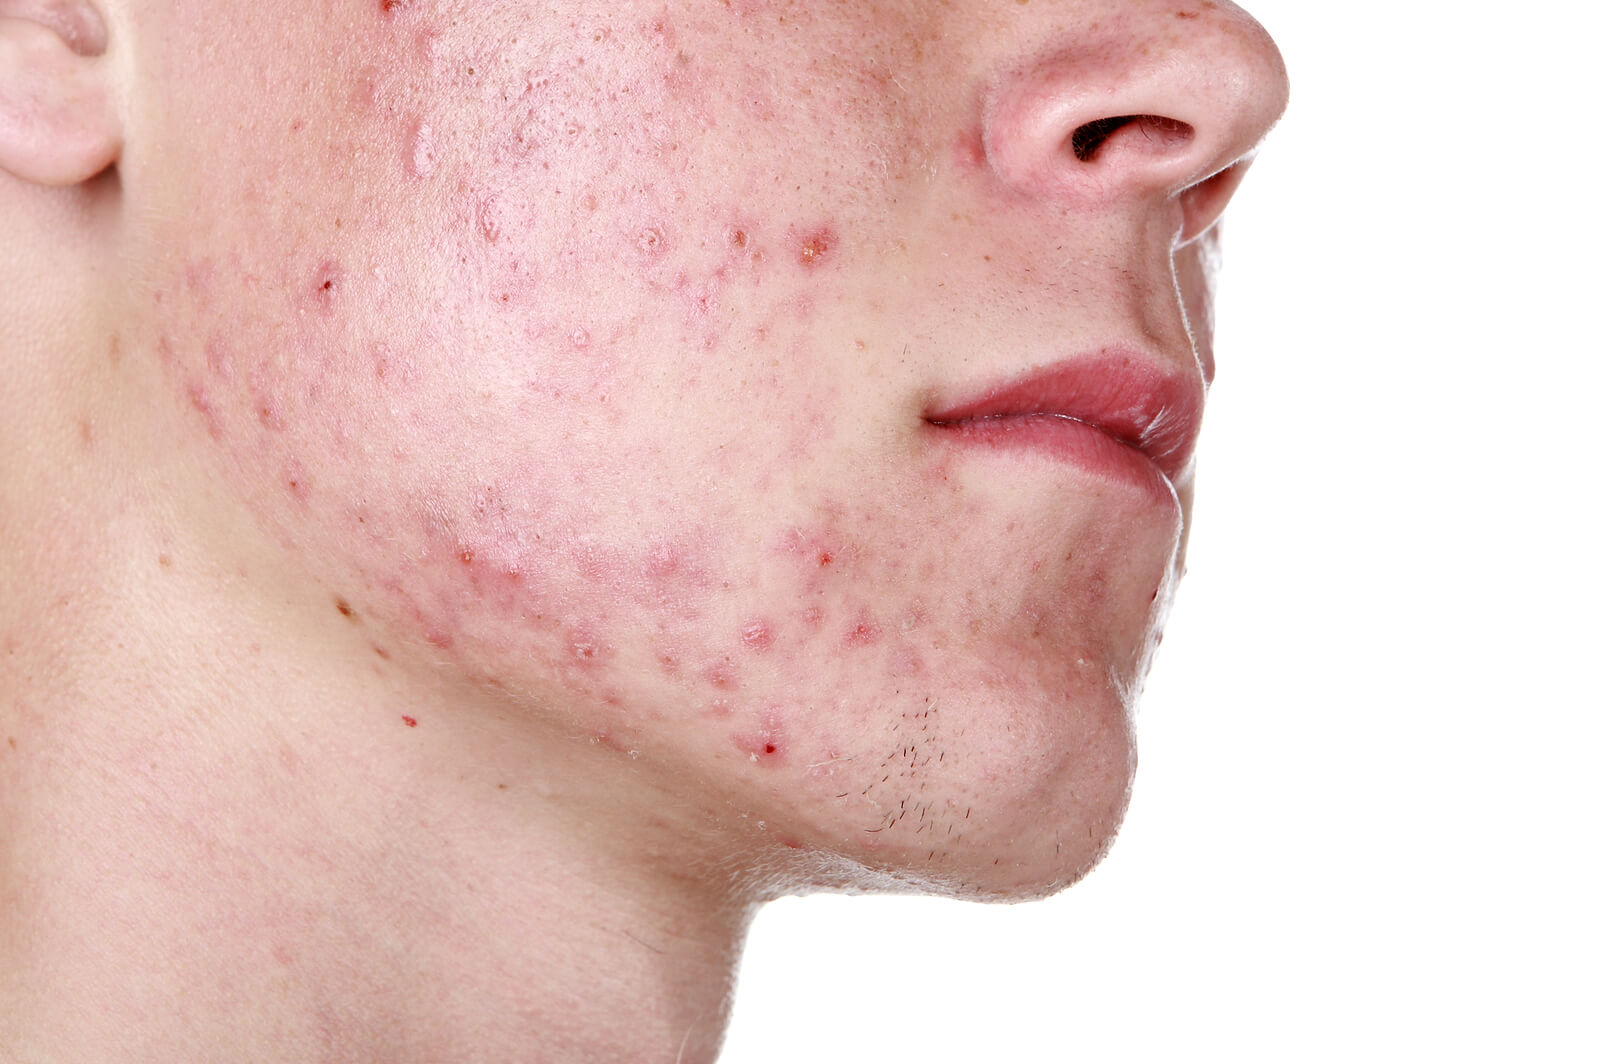 Nodular acne symptoms